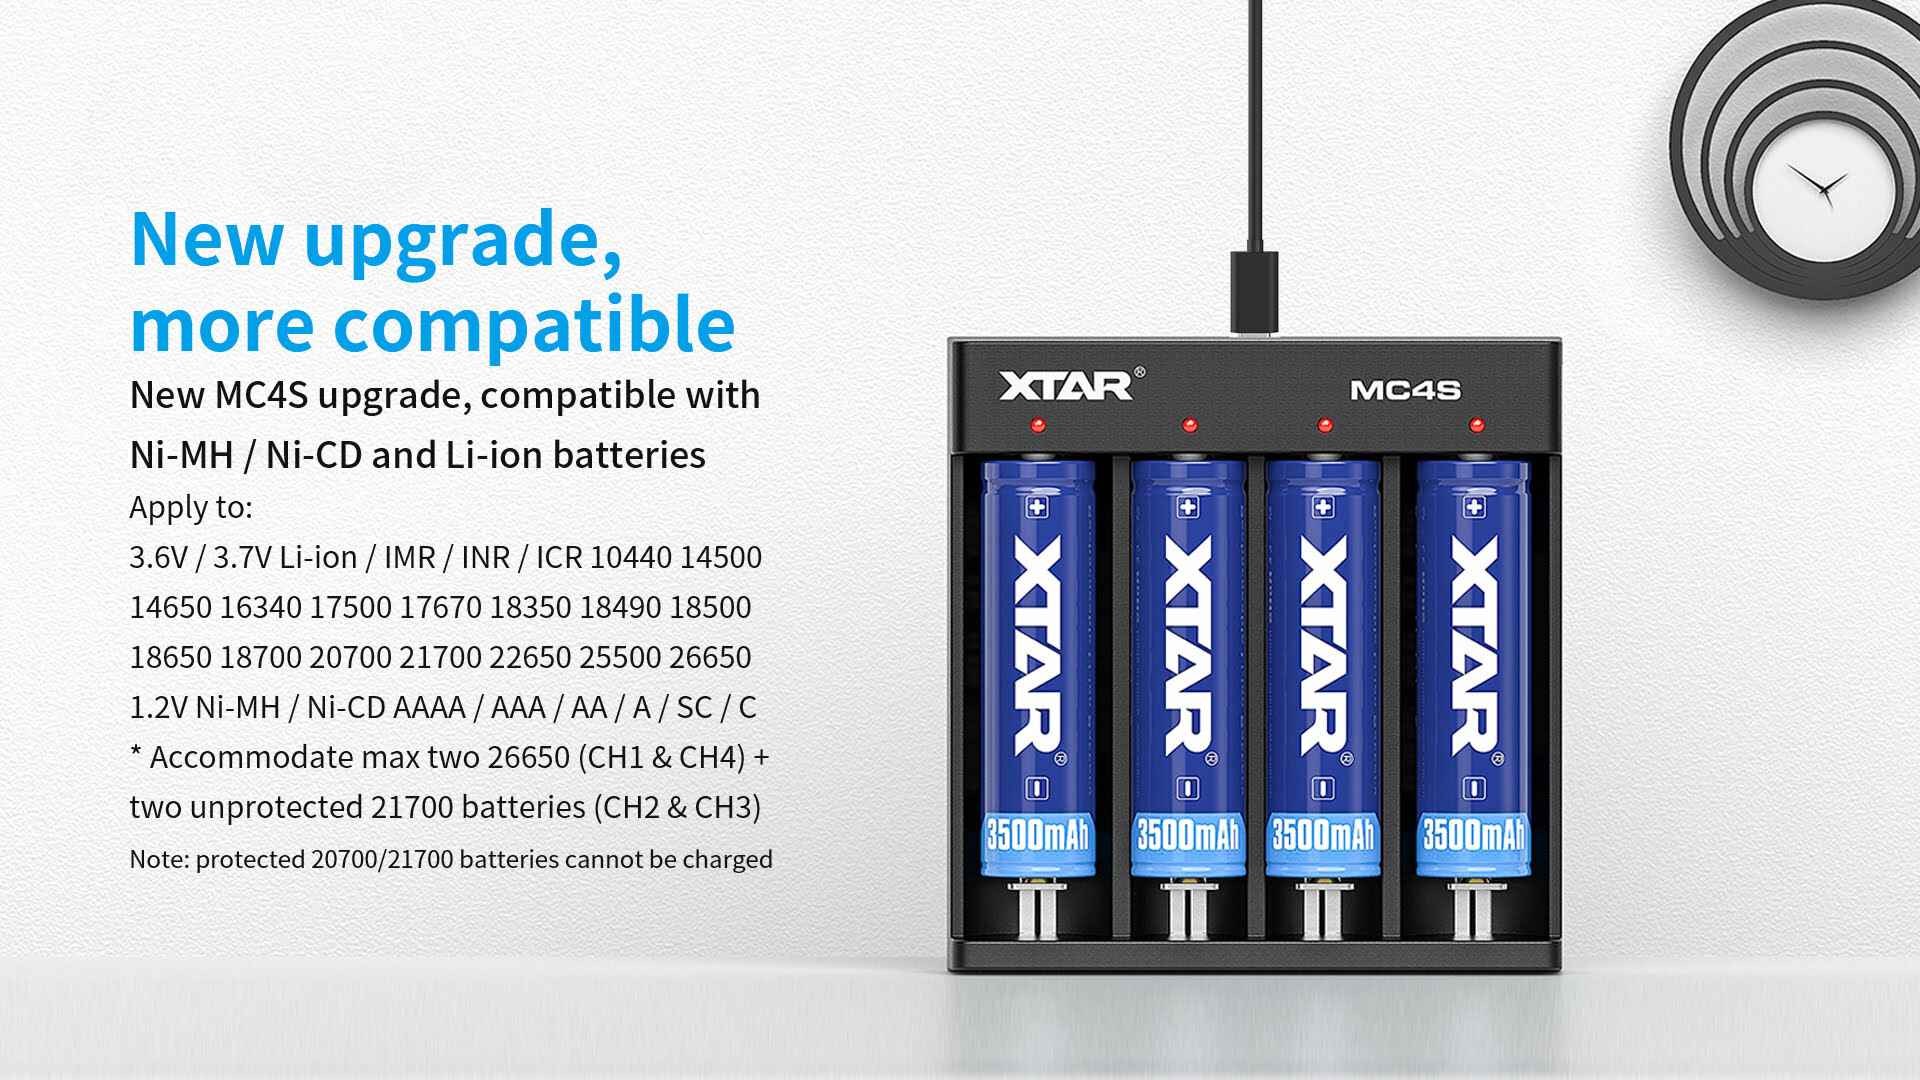 xtar mc4s usb 18650 battery charger mantisfpv australia description 01